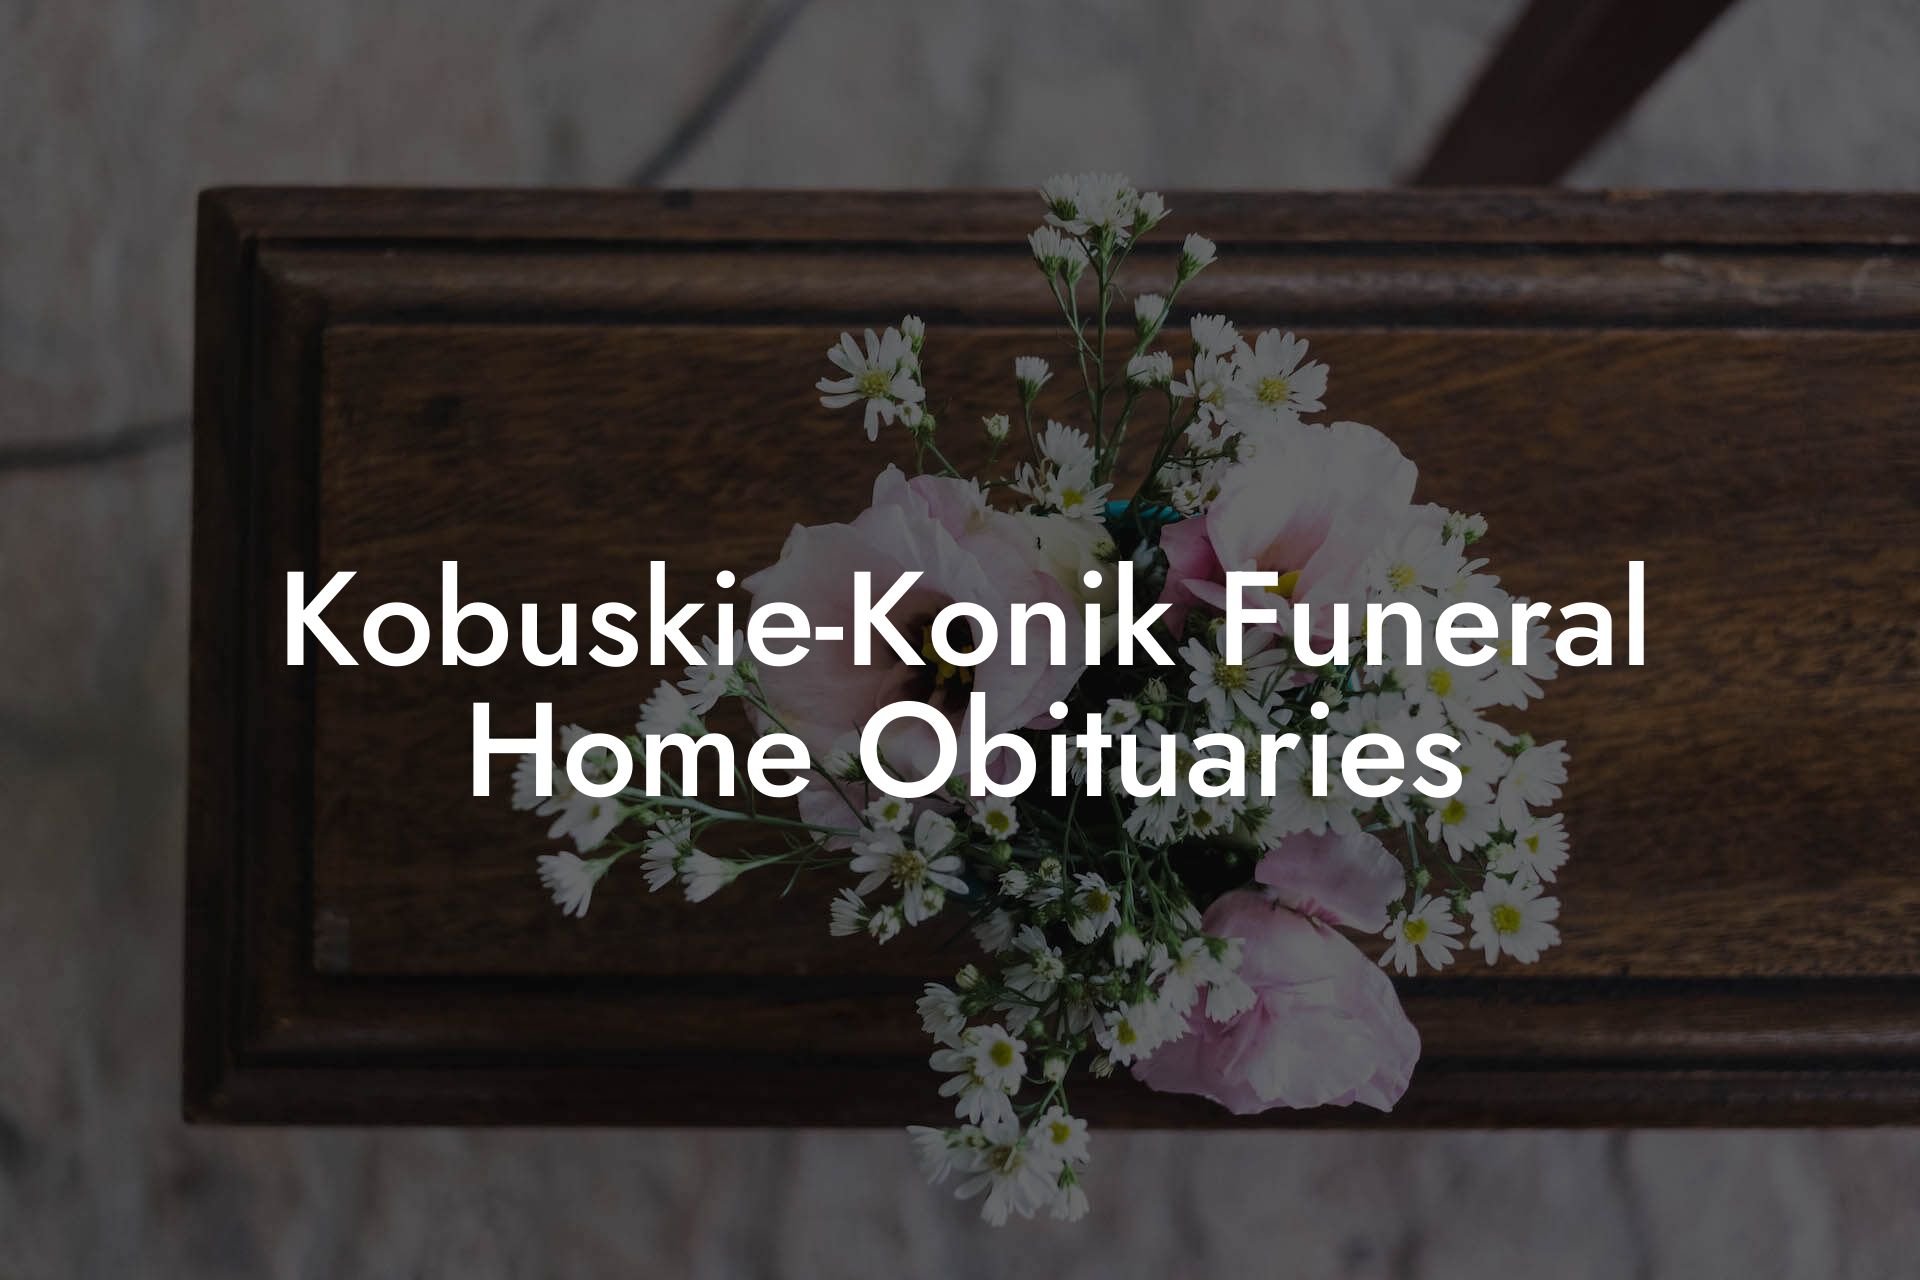 Kobuskie-Konik Funeral Home Obituaries